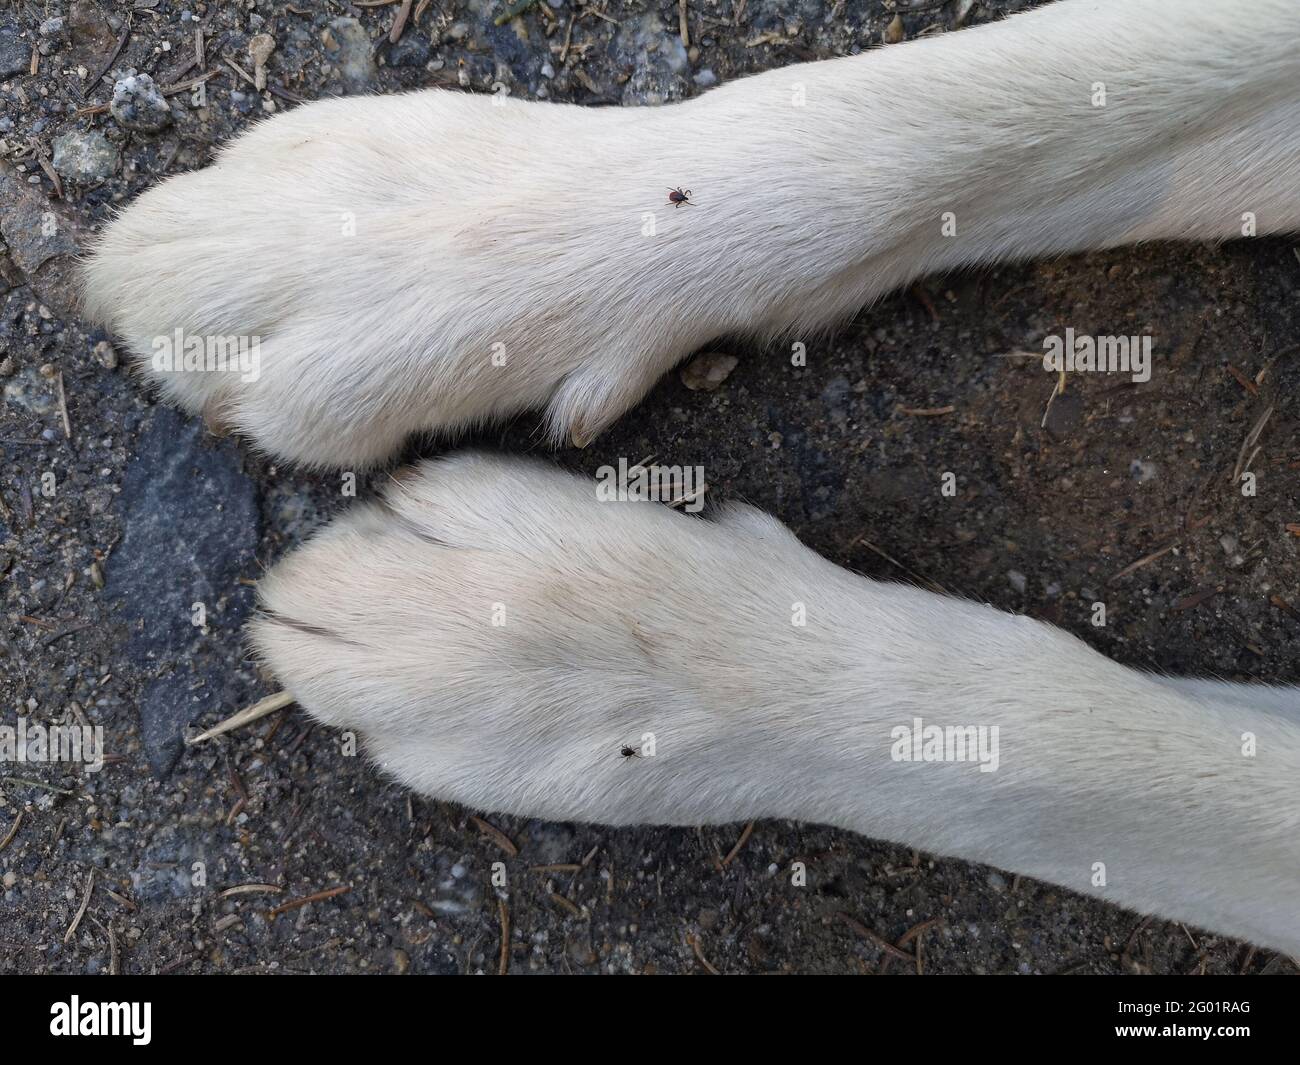 ticks, ixodes ricinus, on white dog's paws, close up Stock Photo